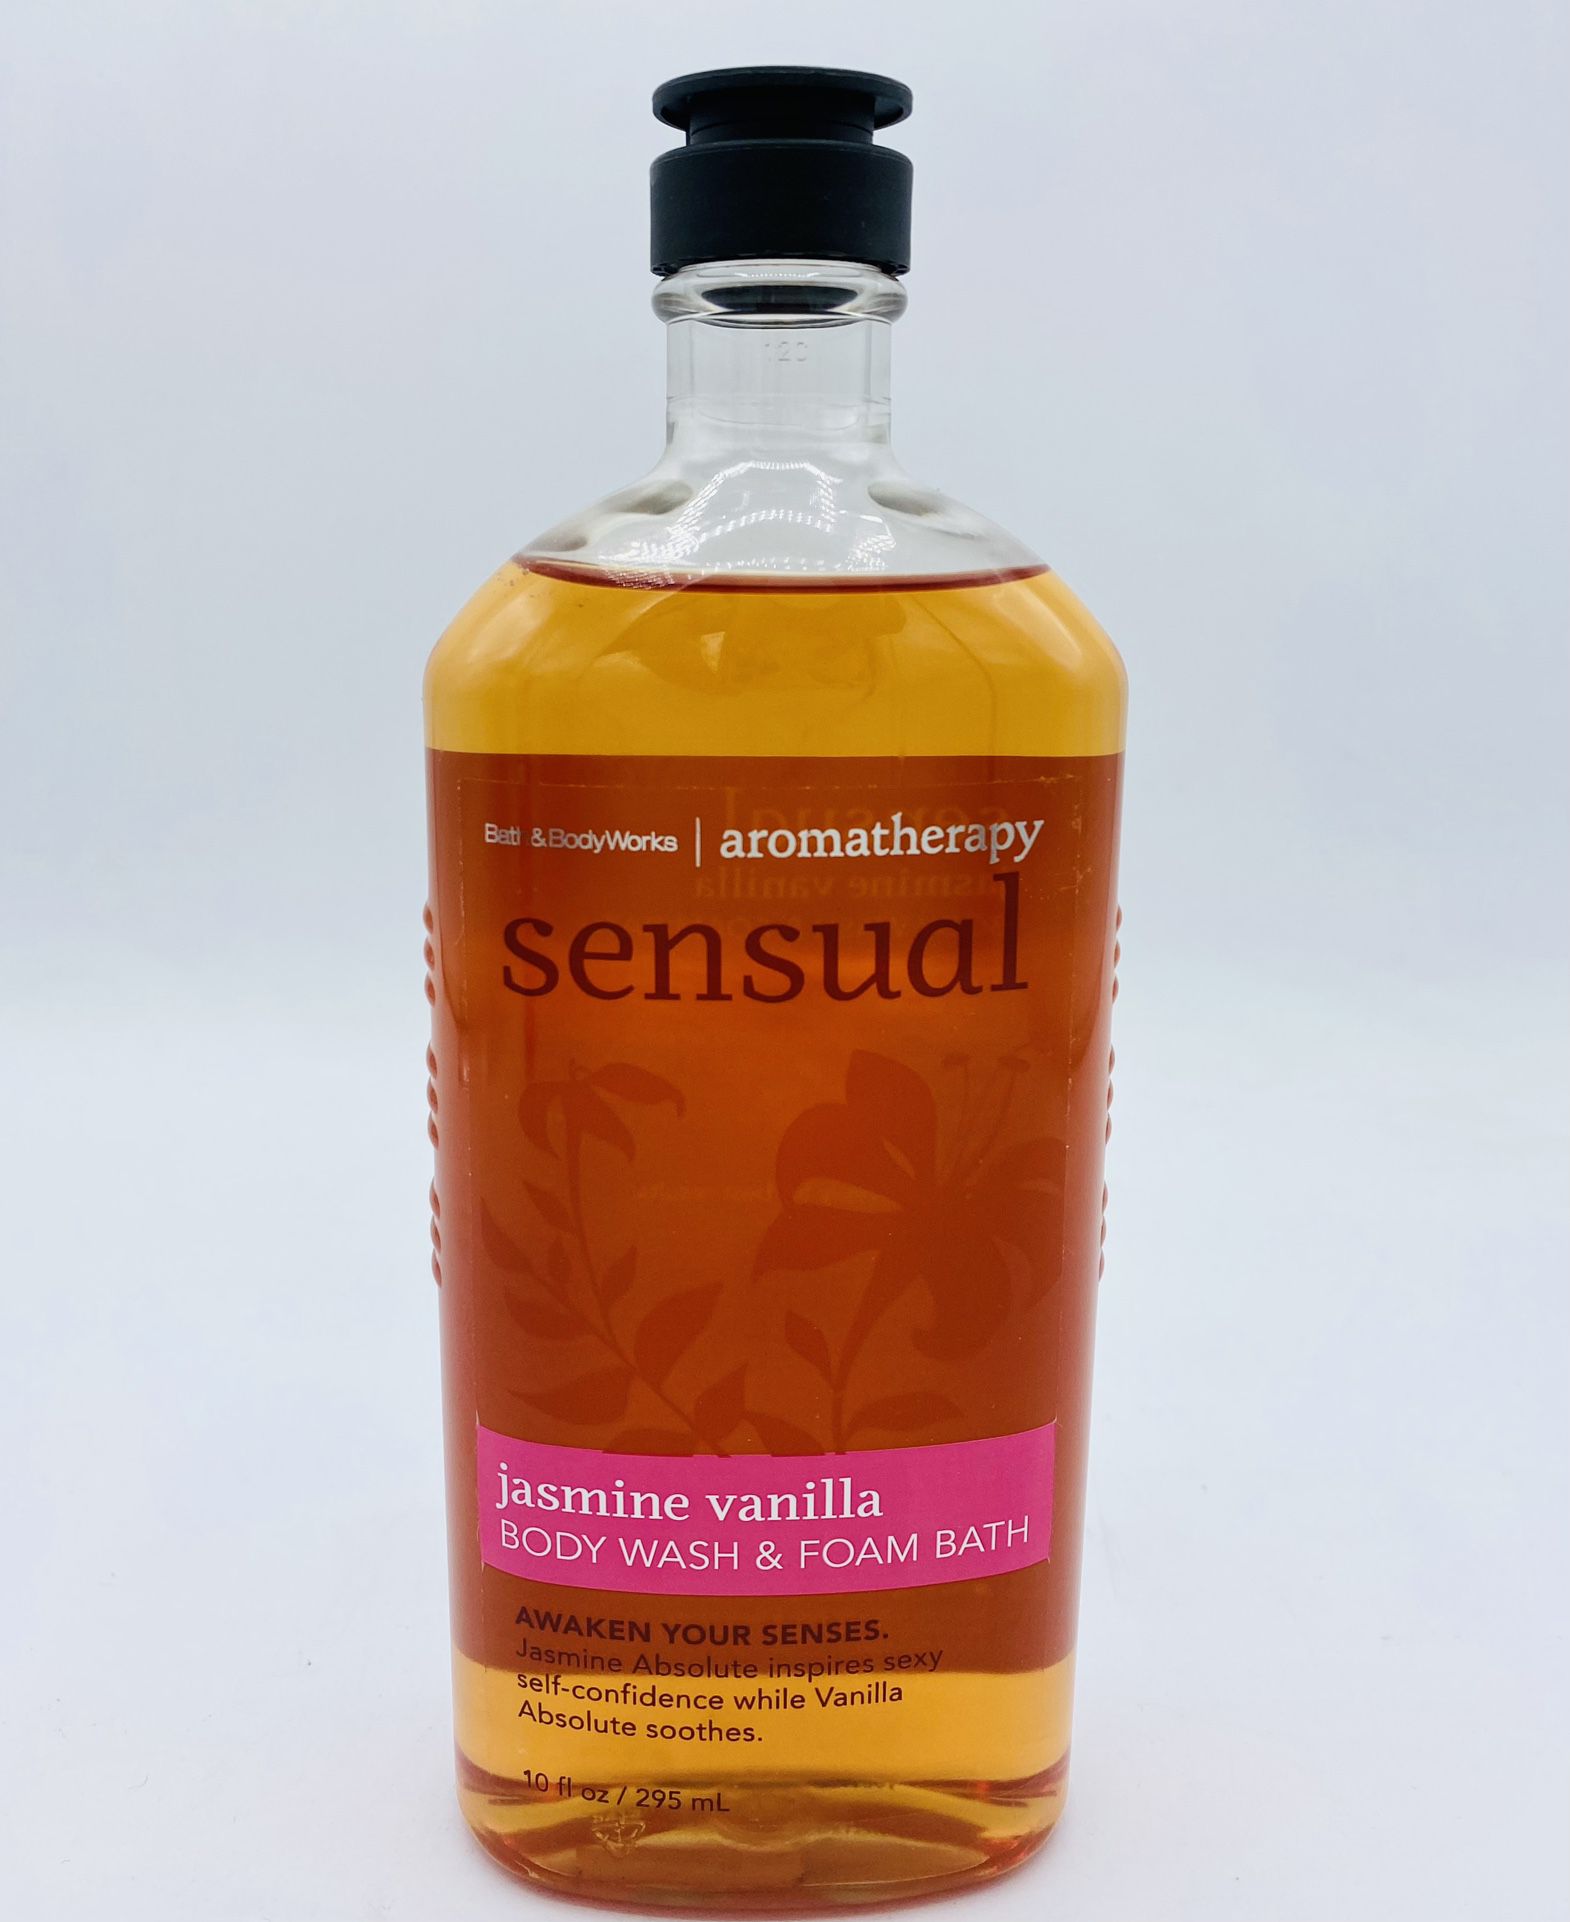 Jasmine Musk Scent, Jasmine Vanilla Aromatherapy Sensual Inspired by